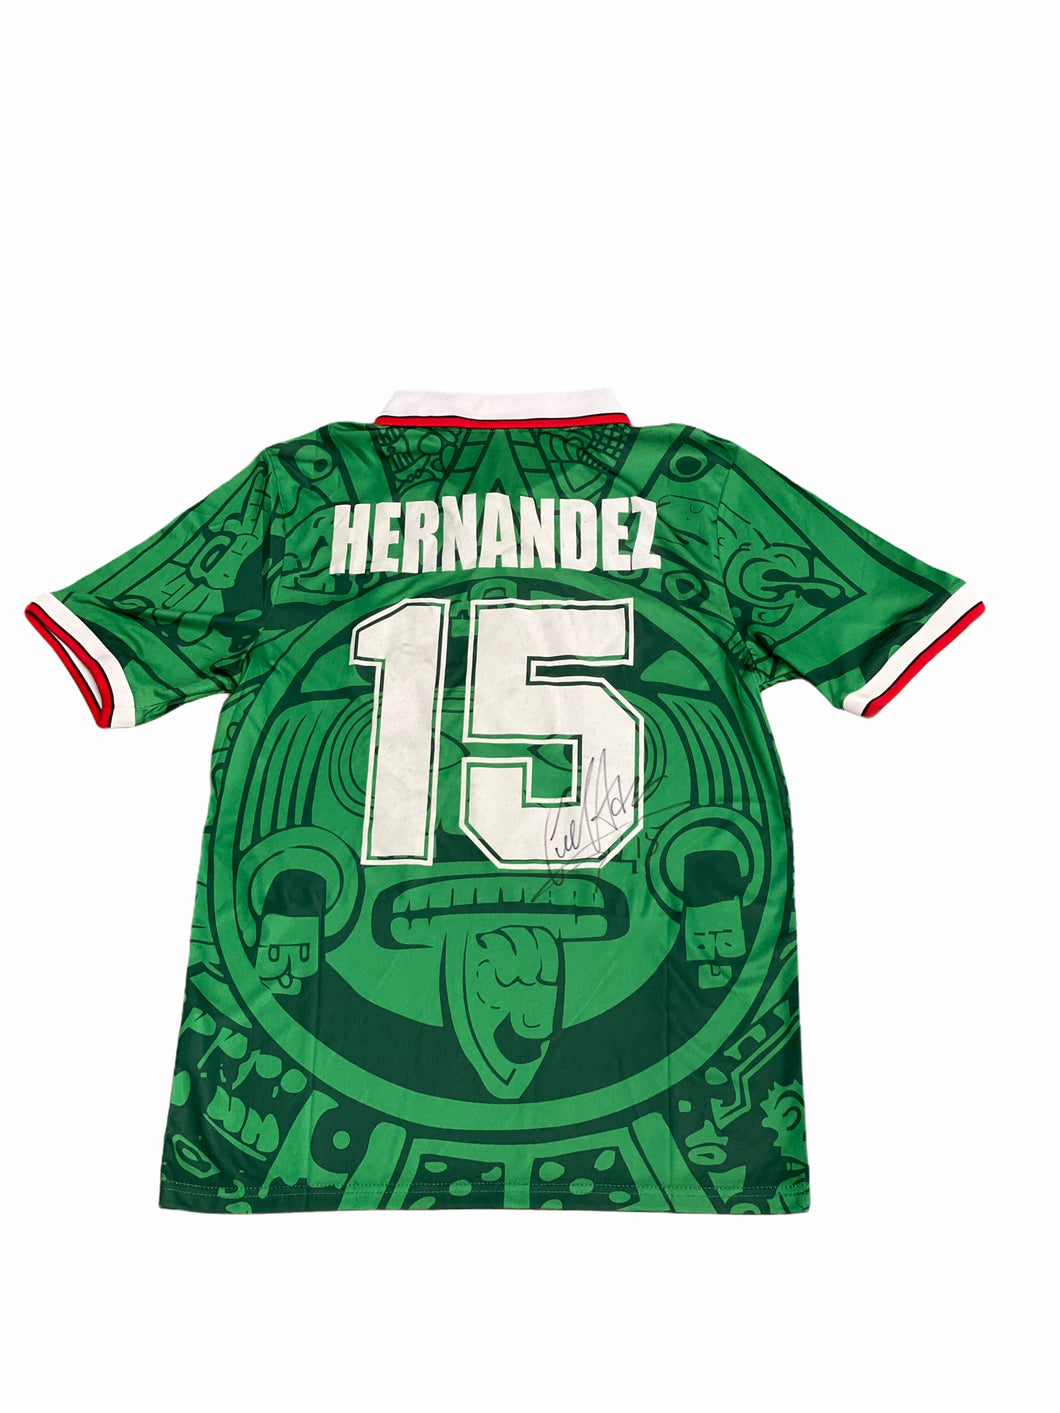 Jersey / México / Luis Hernández 